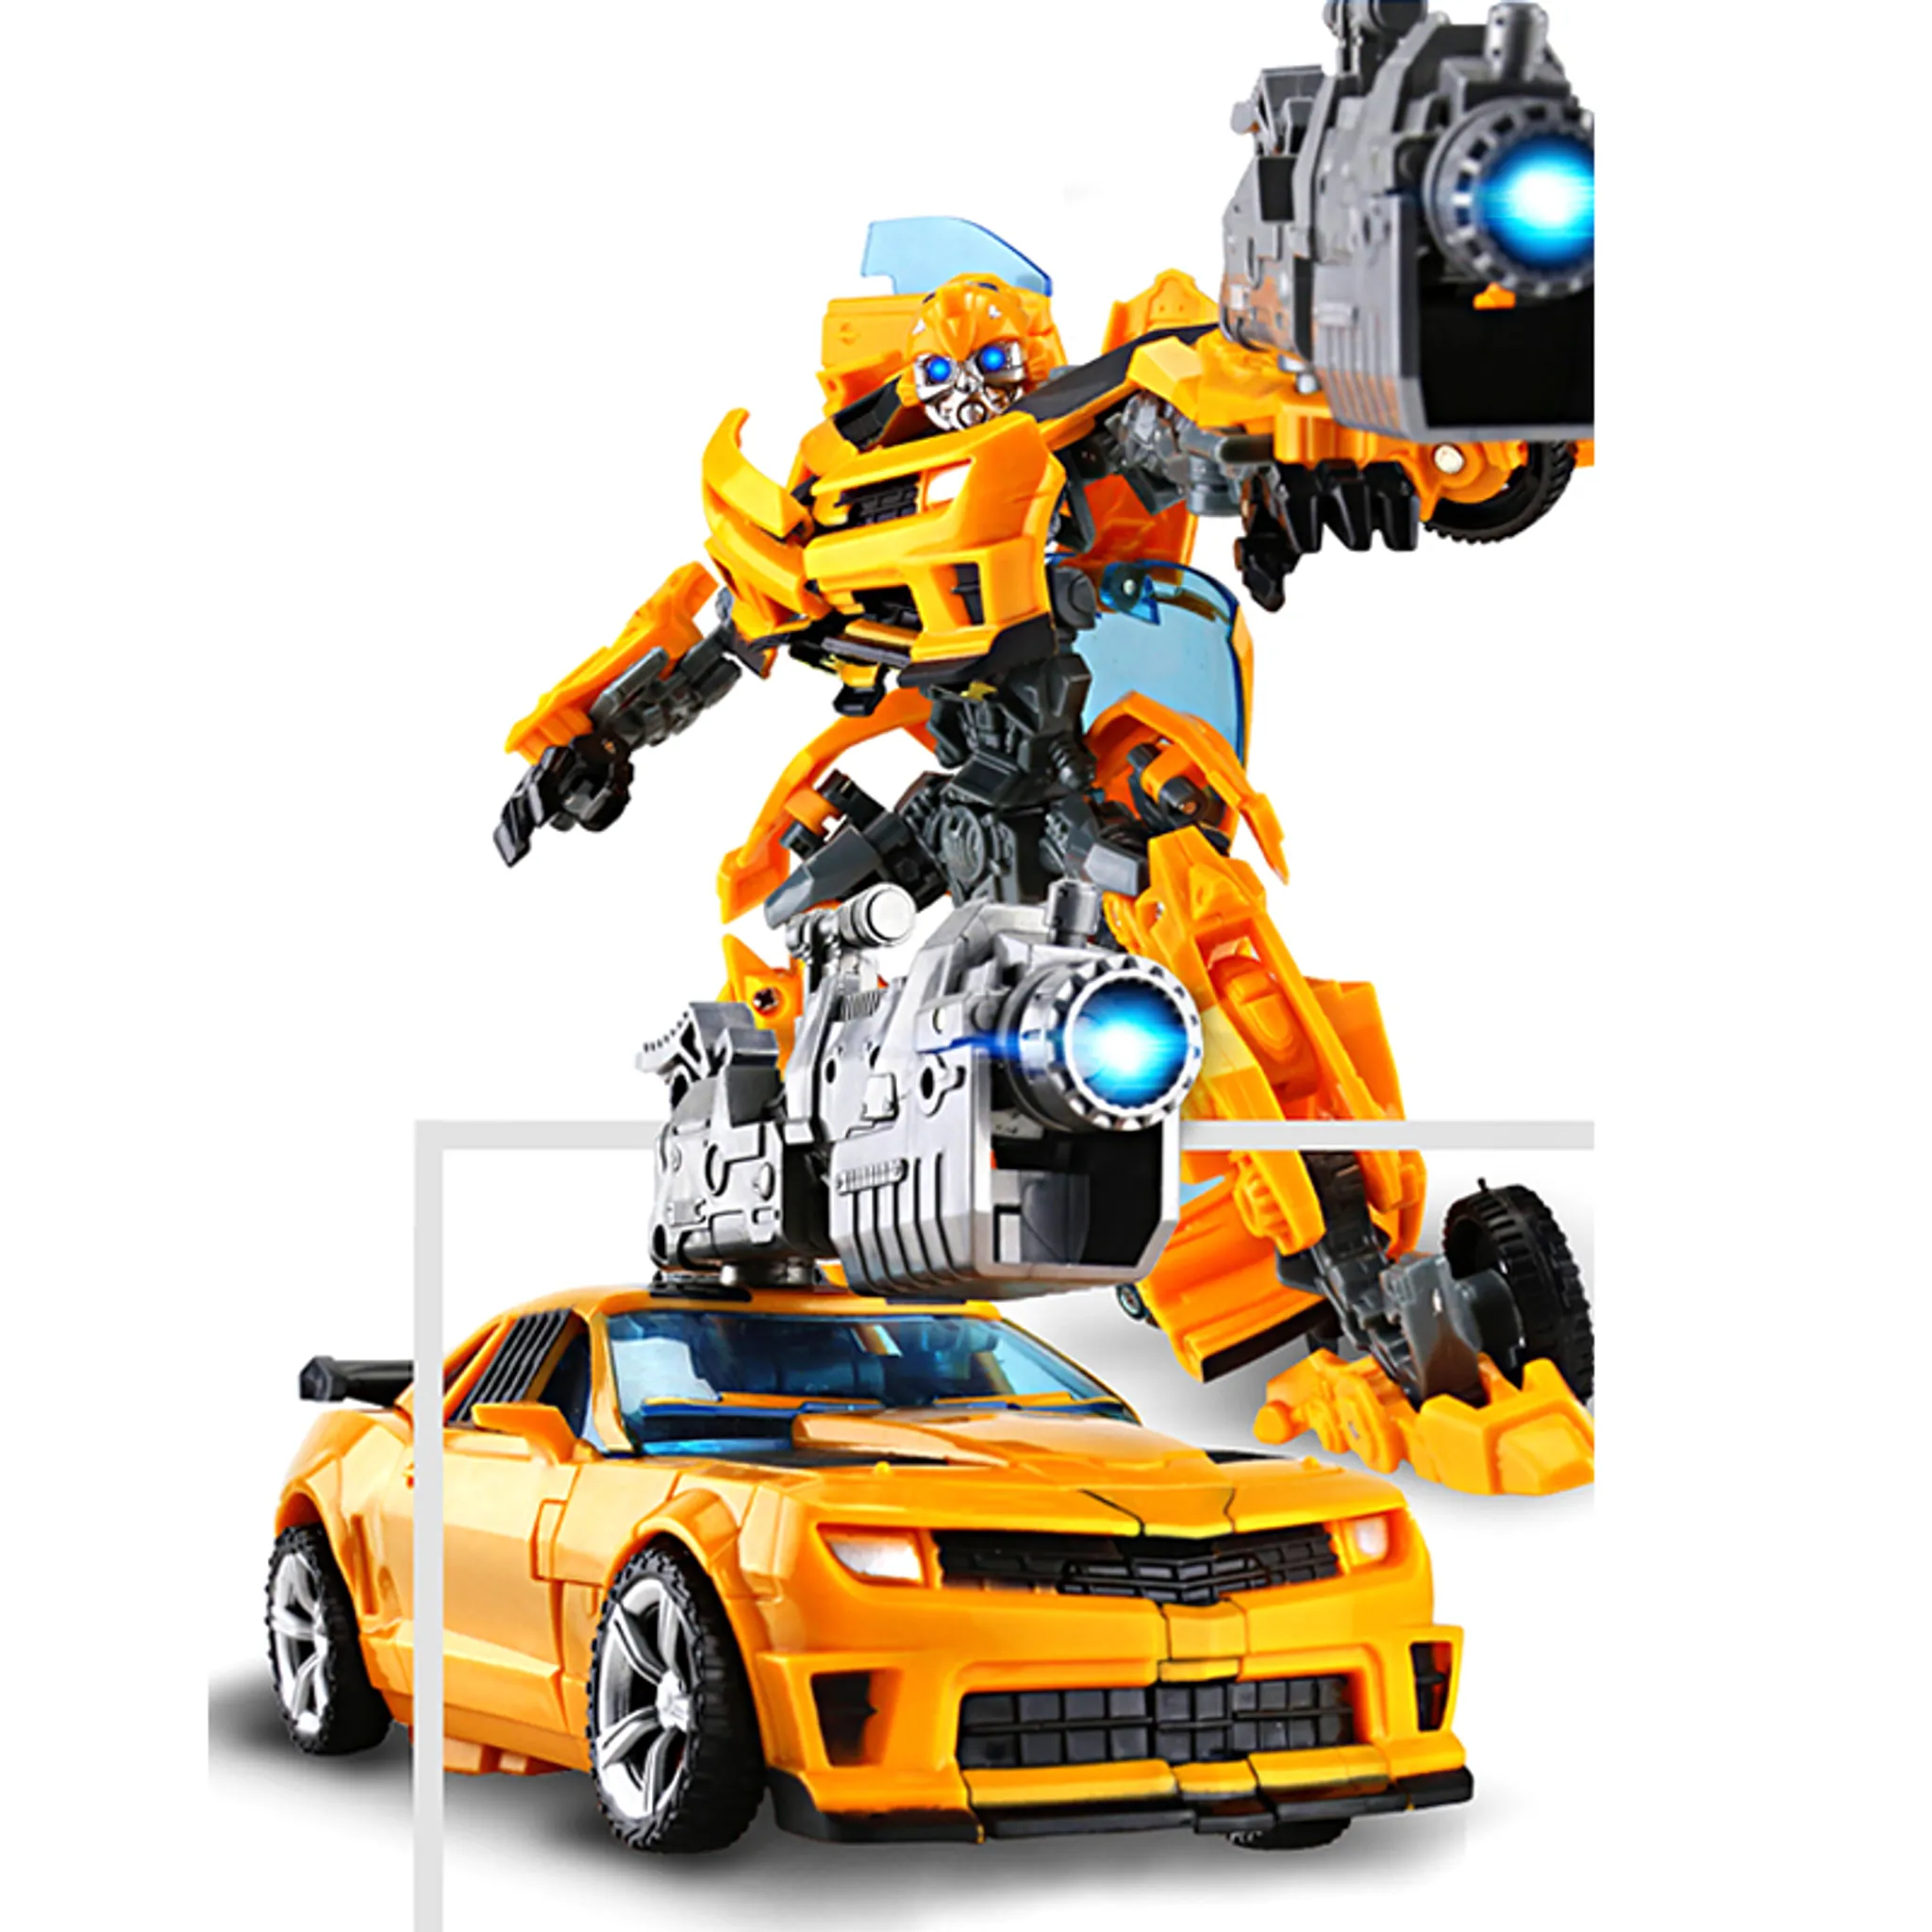 Kinder Transformers Bumblebee Roboter Flim Figur Auto Actionsfigur Spielzeug DHL 